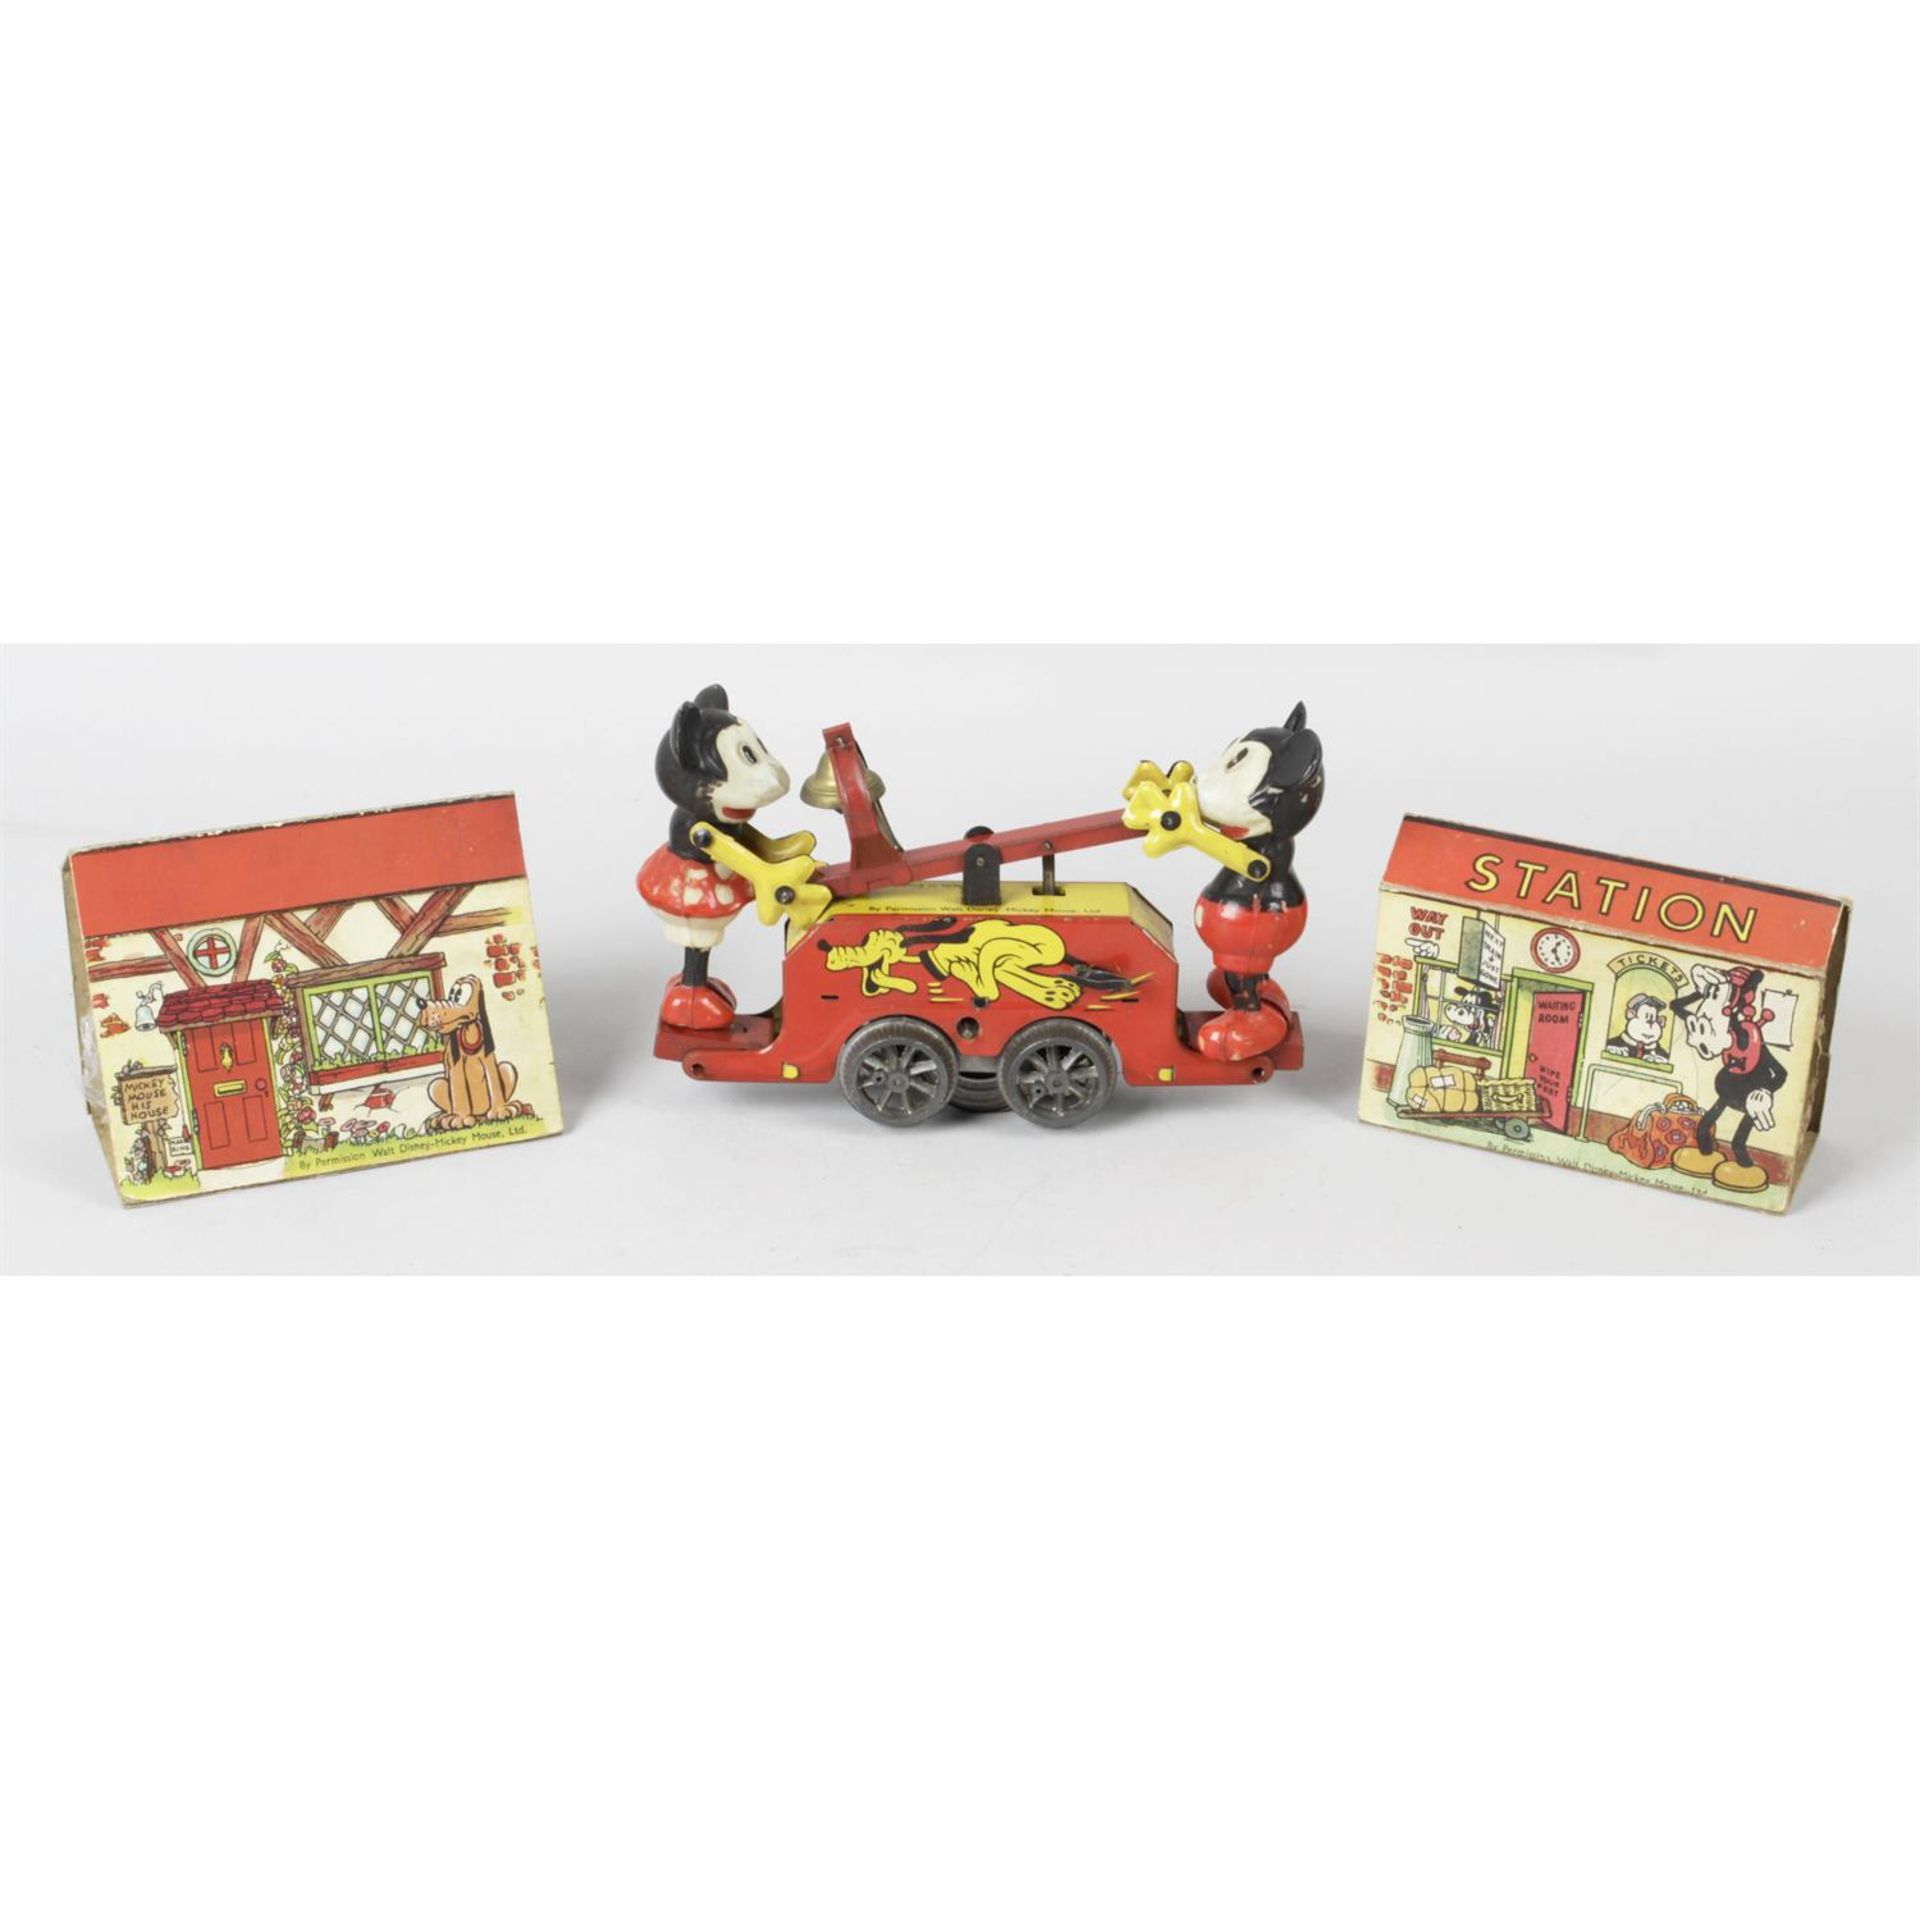 A Wells O London tinplate Mickey Mouse handcar set.